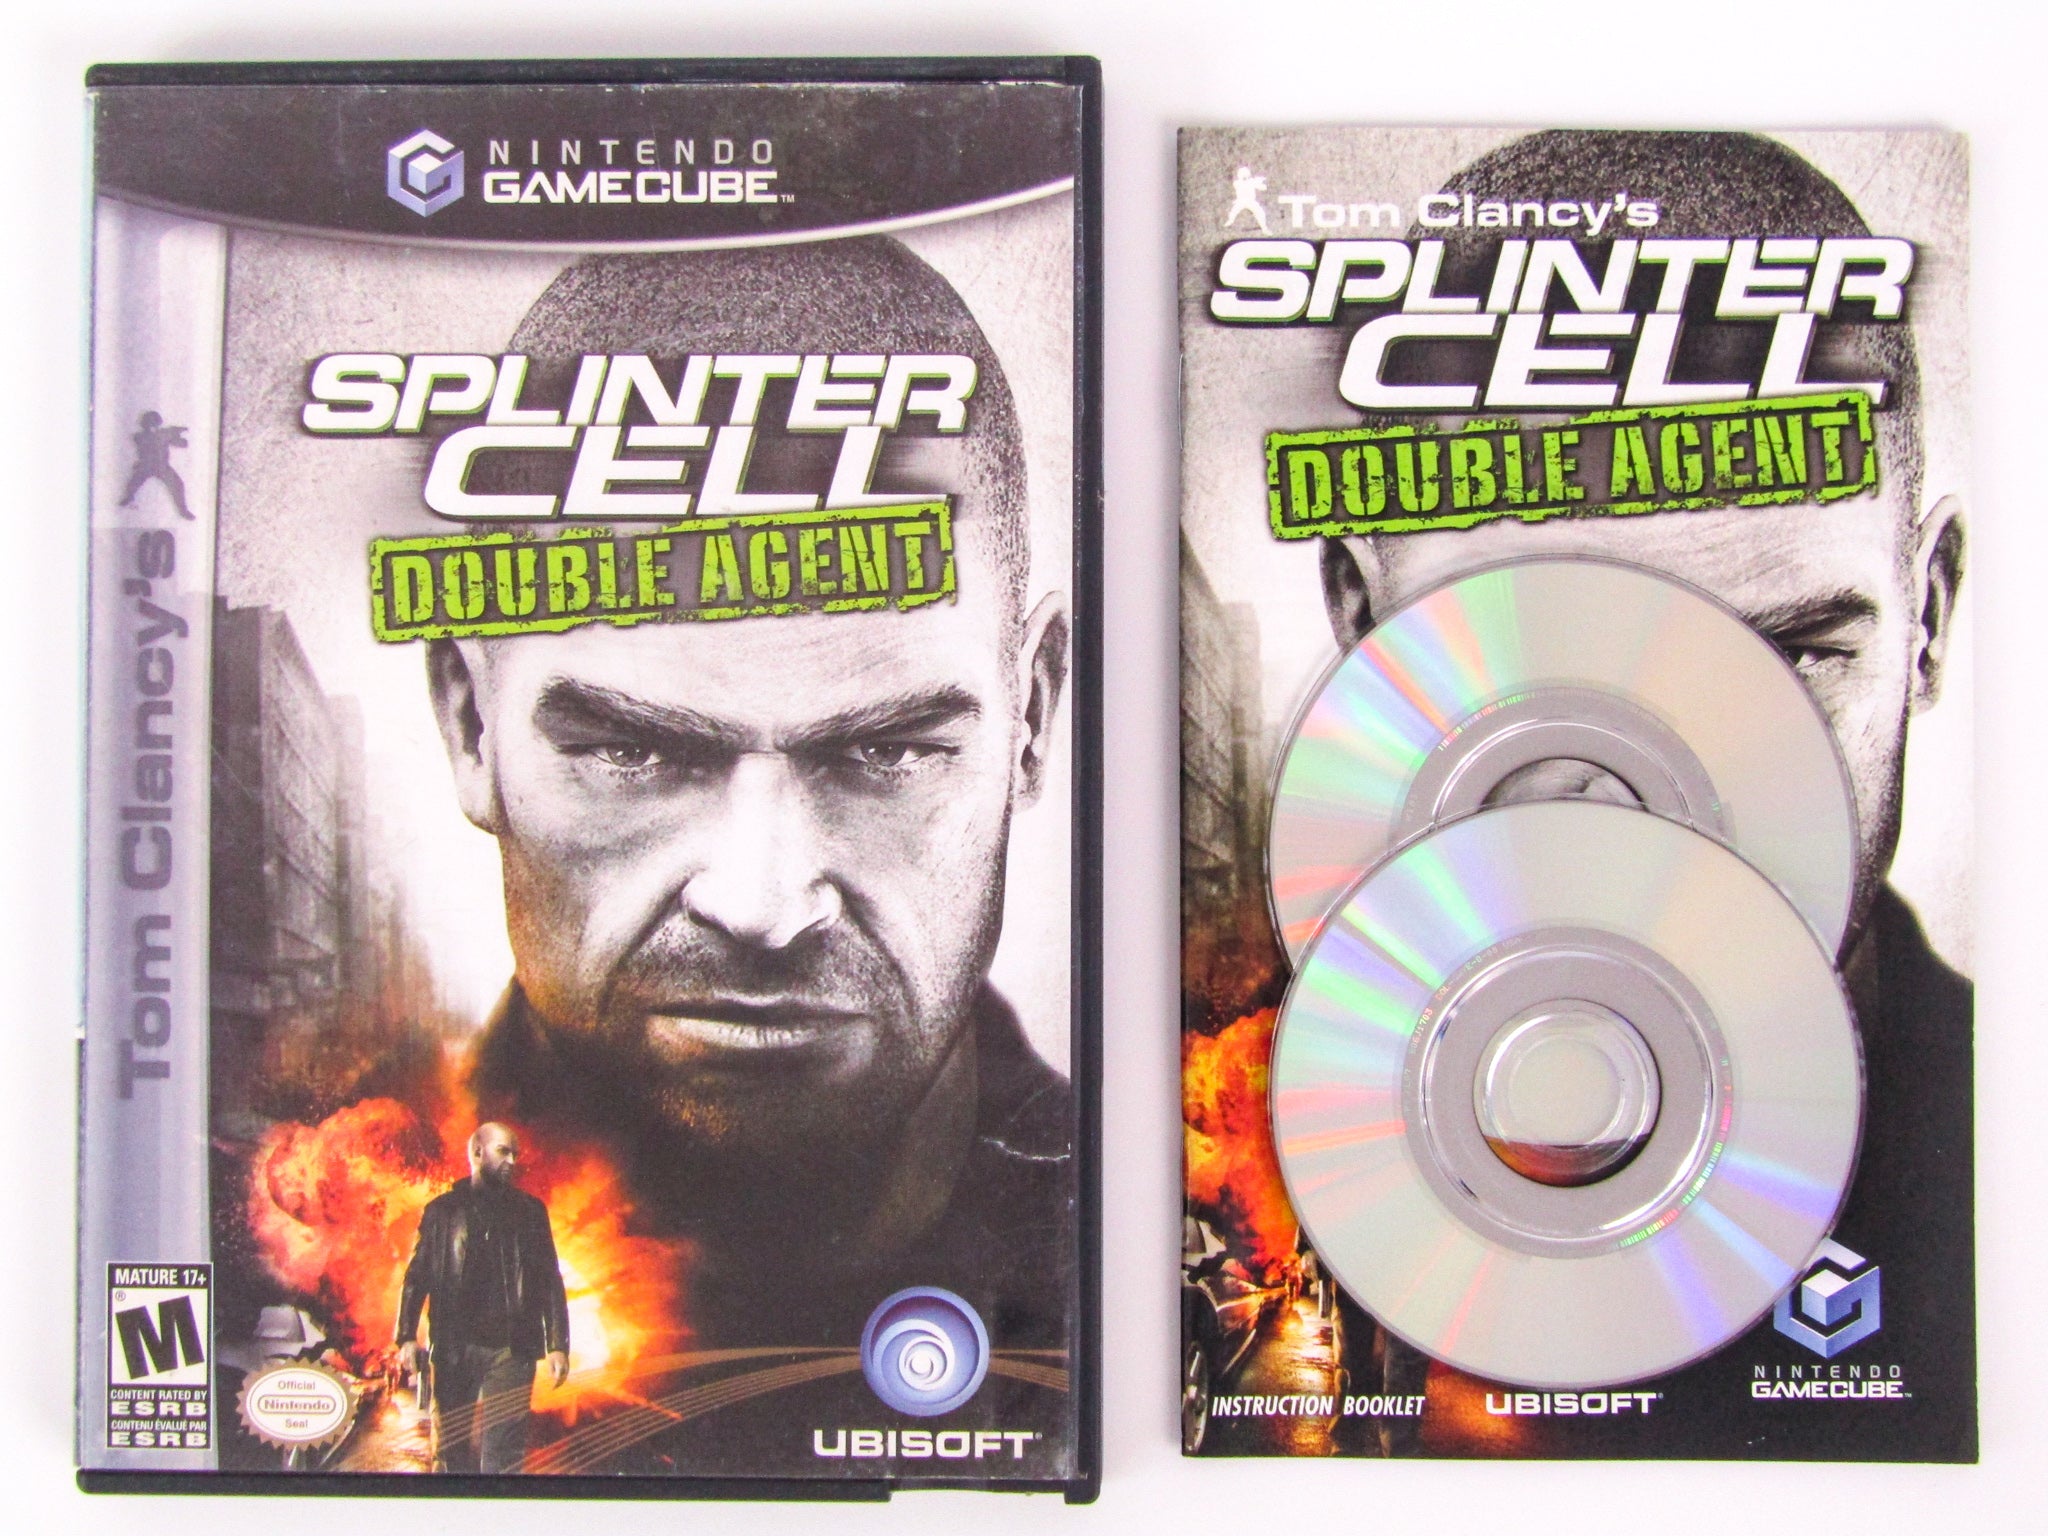 Splinter Cell: Double Agent - VGMdb